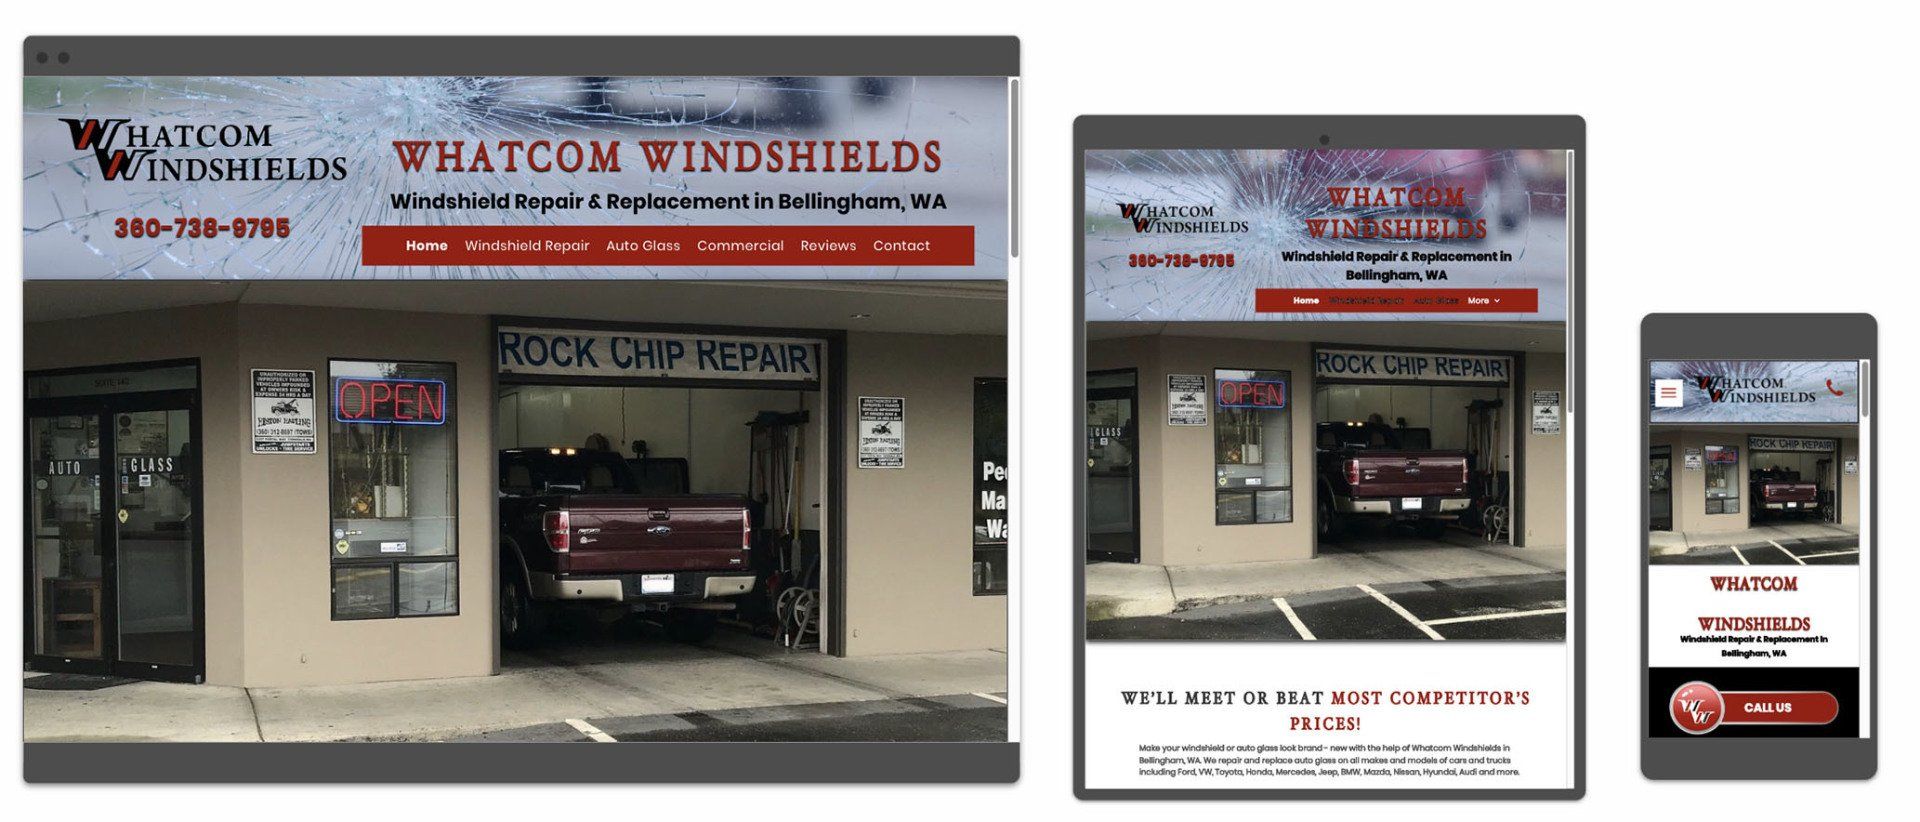 Whatcom Windshields website image